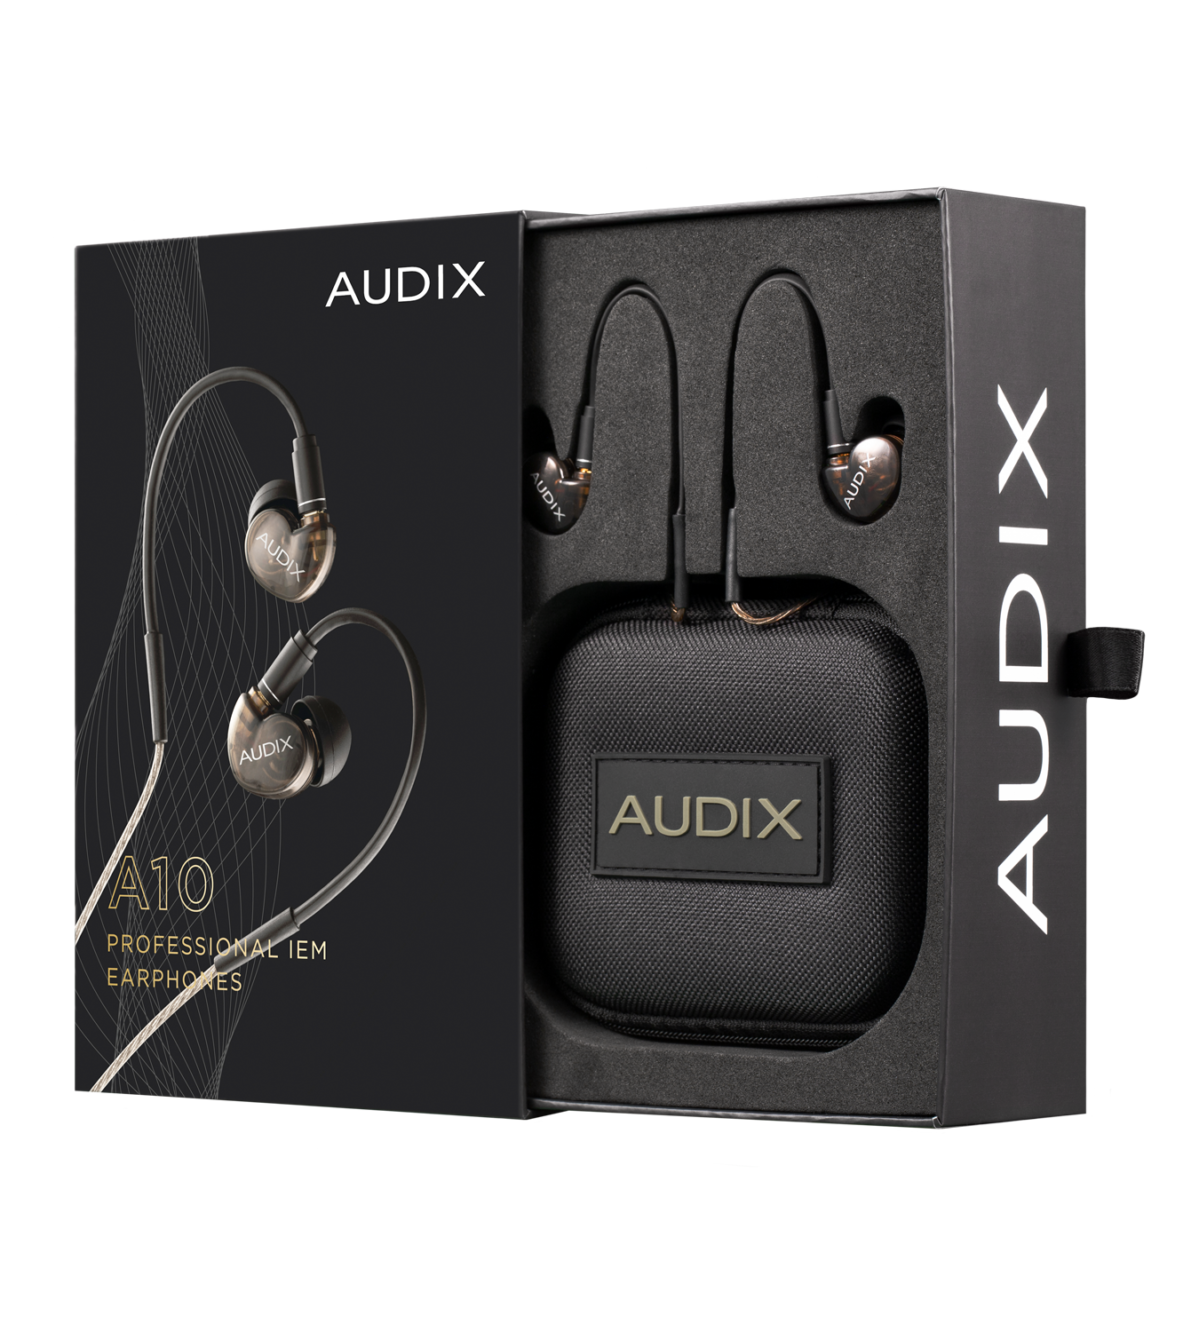 AUDIX A10 Earphones